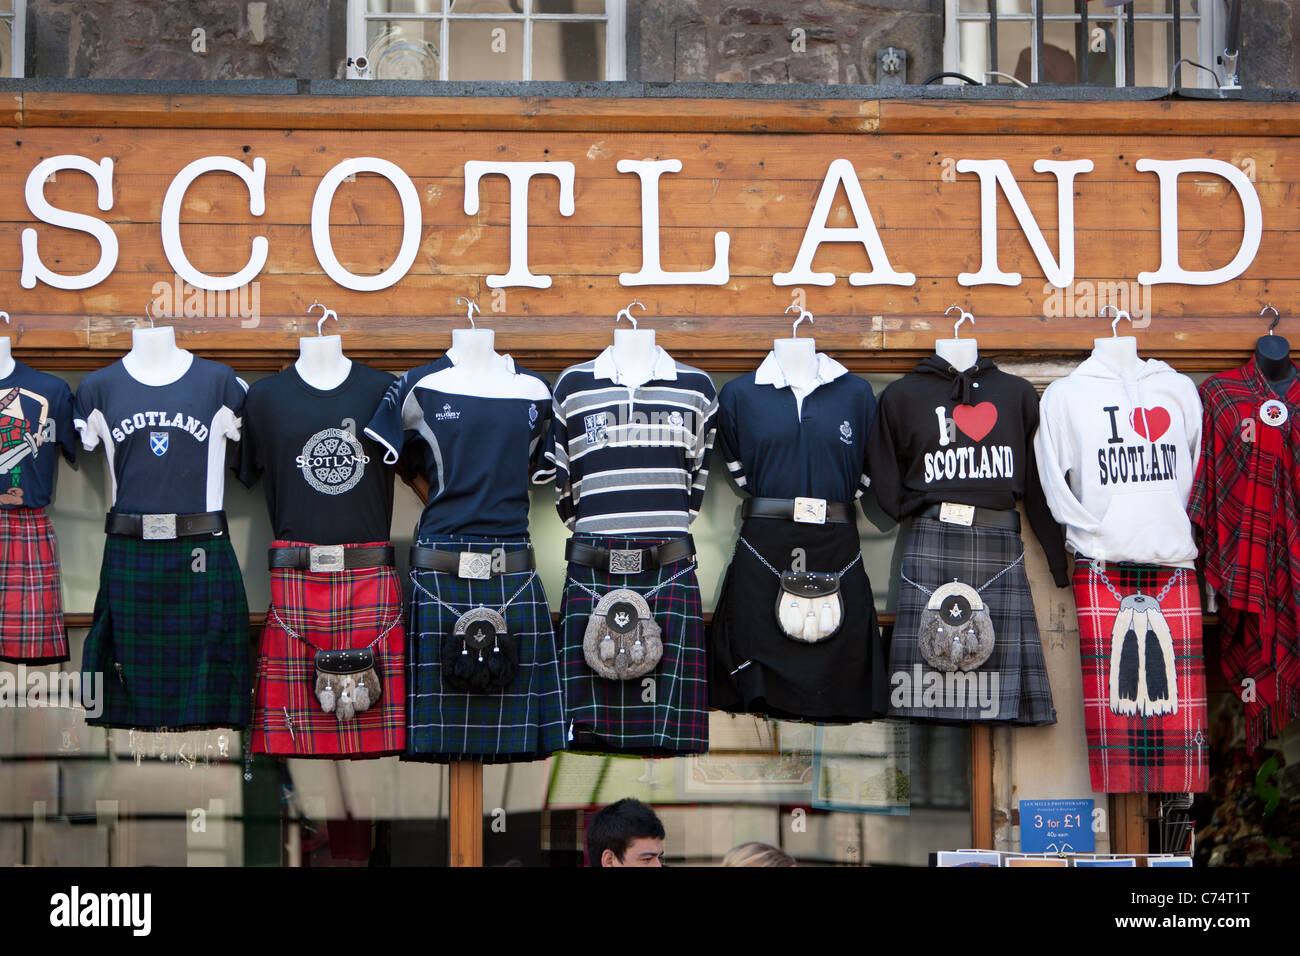 Shop selling Scottish souvenirs beside the Royal Mile/High Street, in Edinburgh, Scotland. Stock Photo